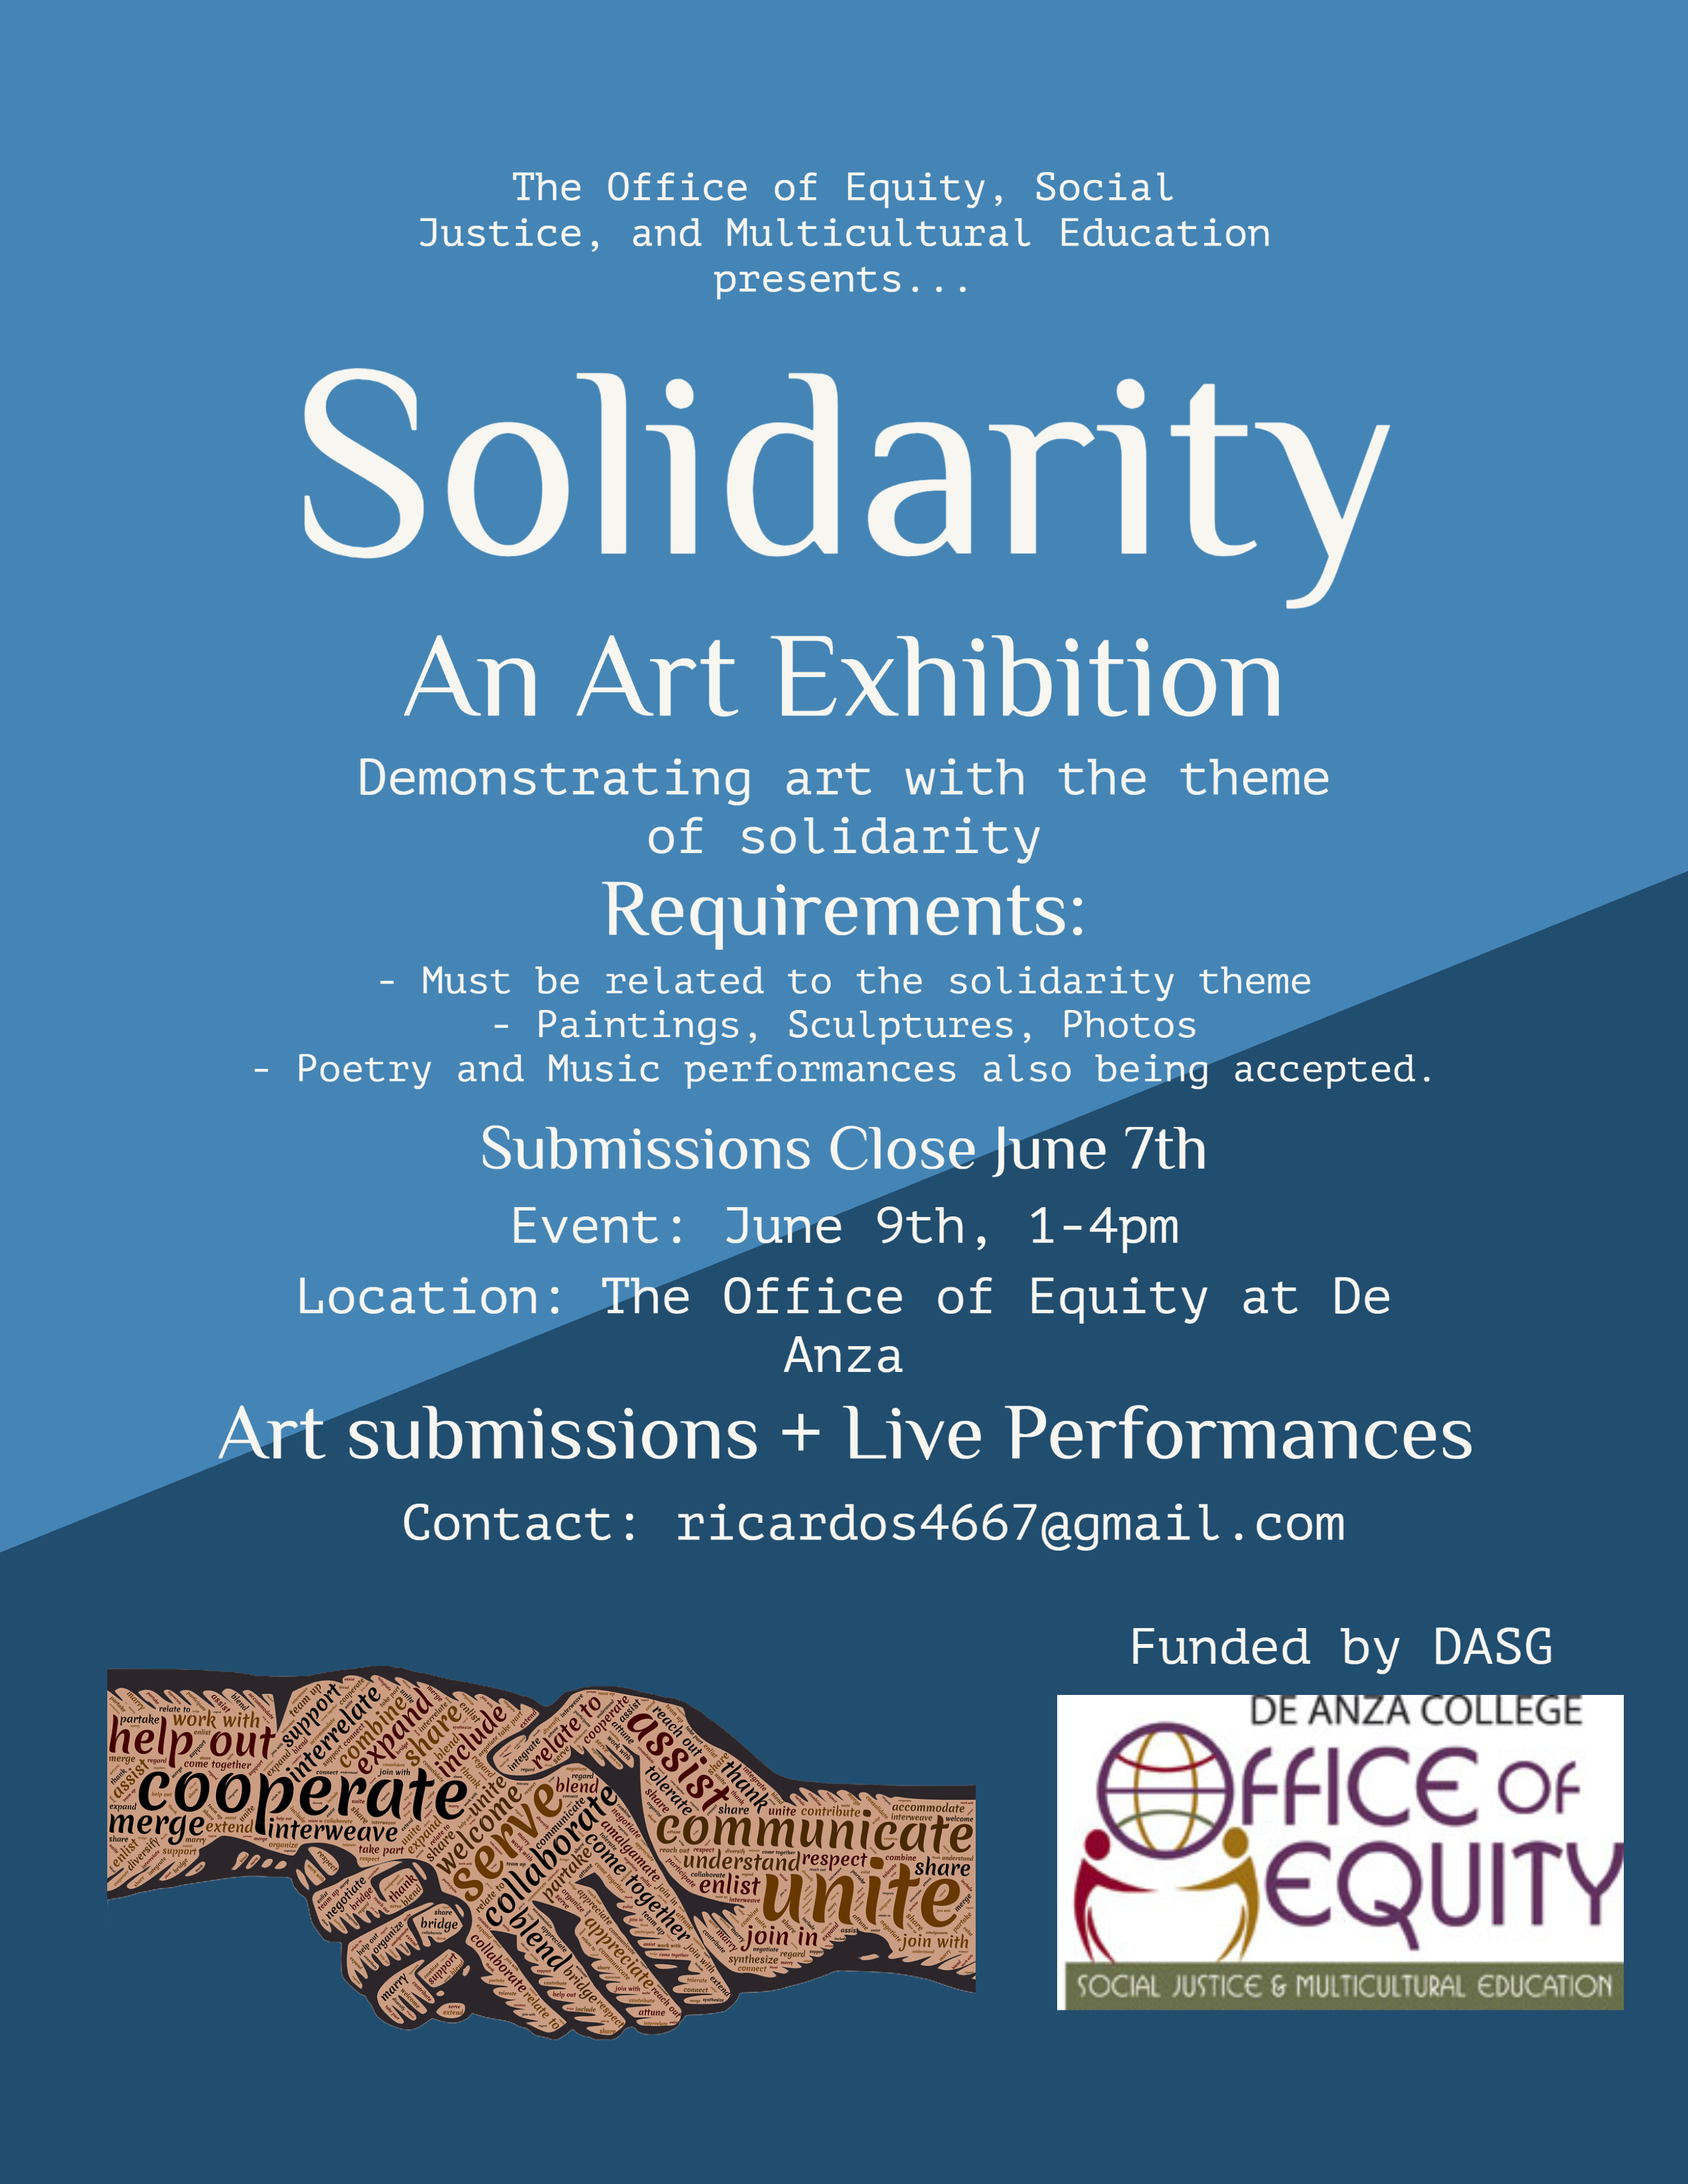 Solidarity: An Art Exhibition